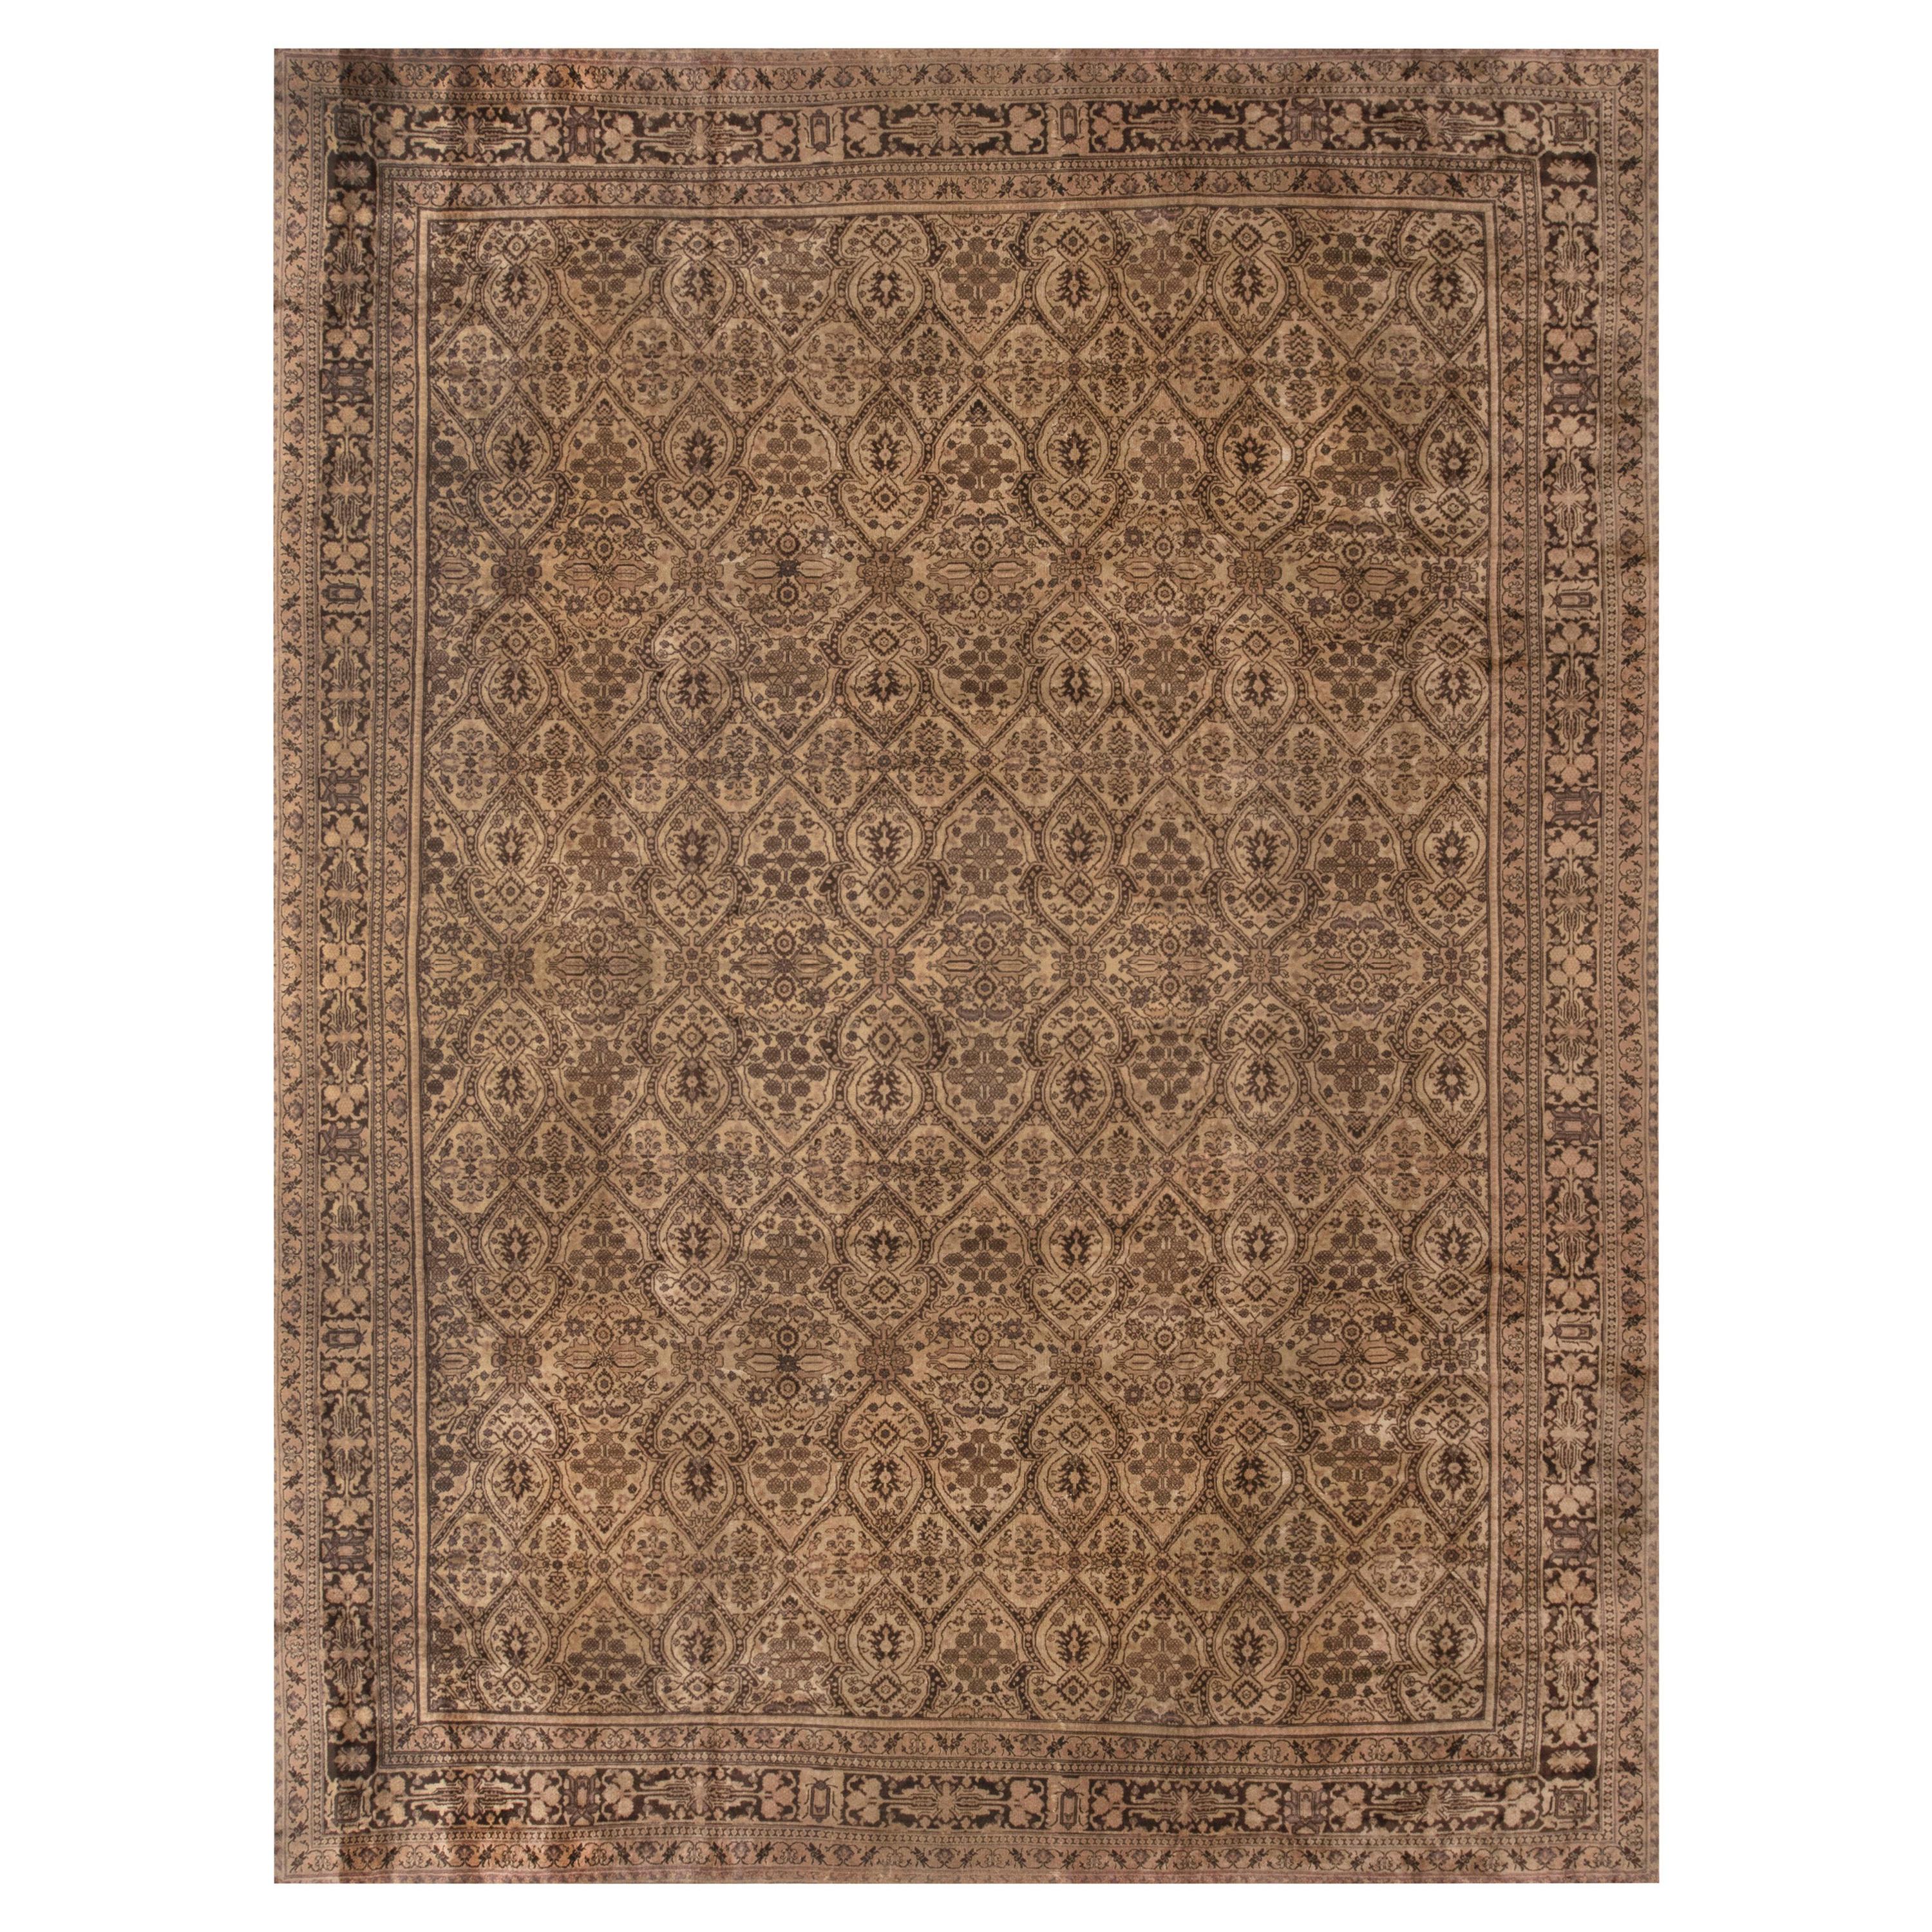 Antique Indian Amritsar Brown Carpet For Sale